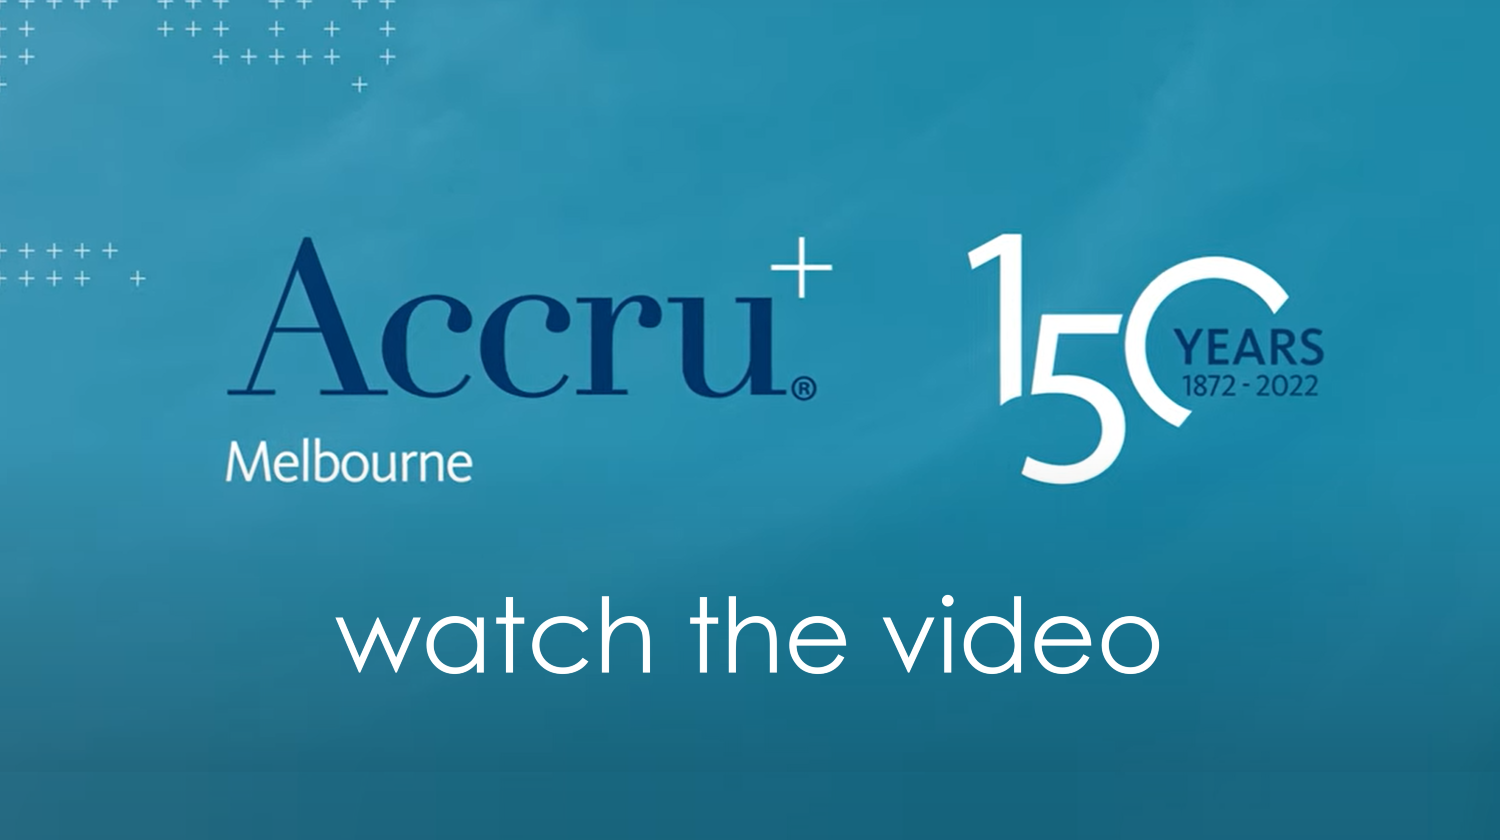 Accru 150 years video thumbnail.png